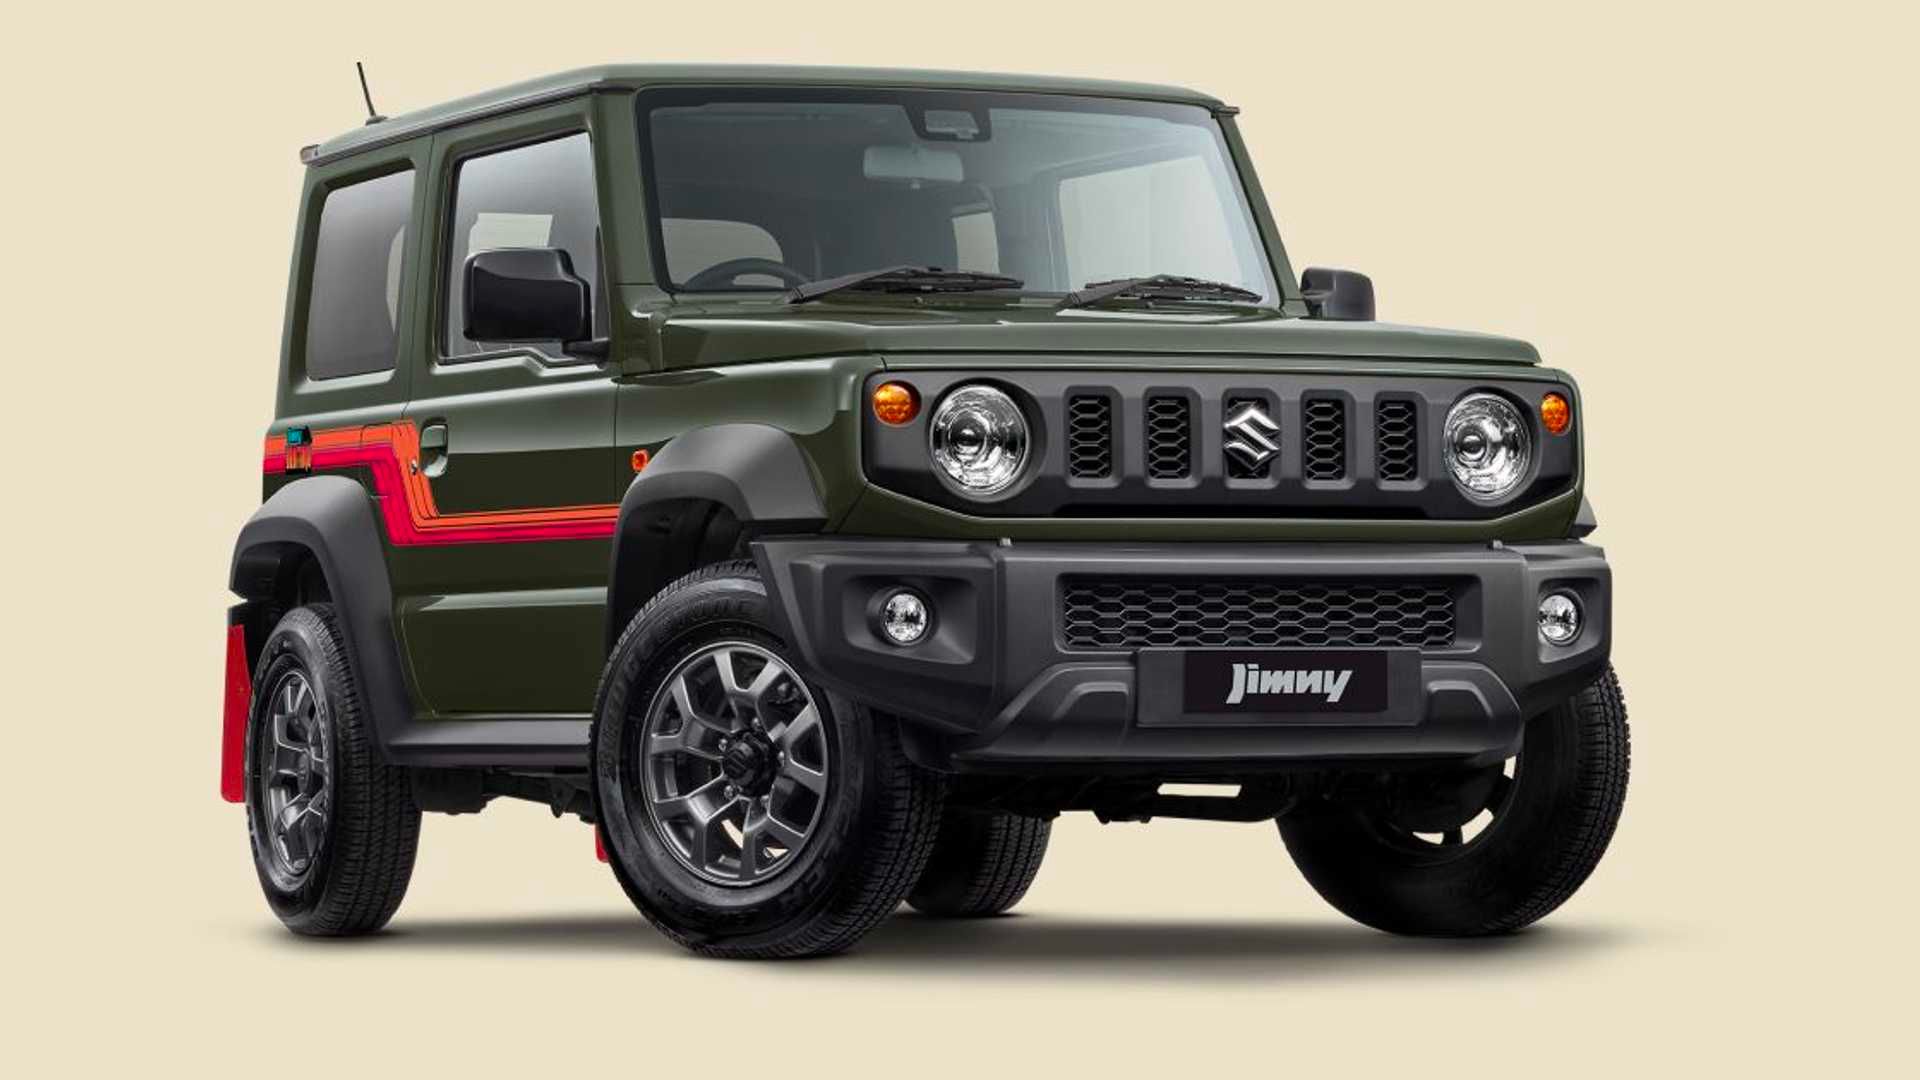 Suzuki Jimny Heritage Edition